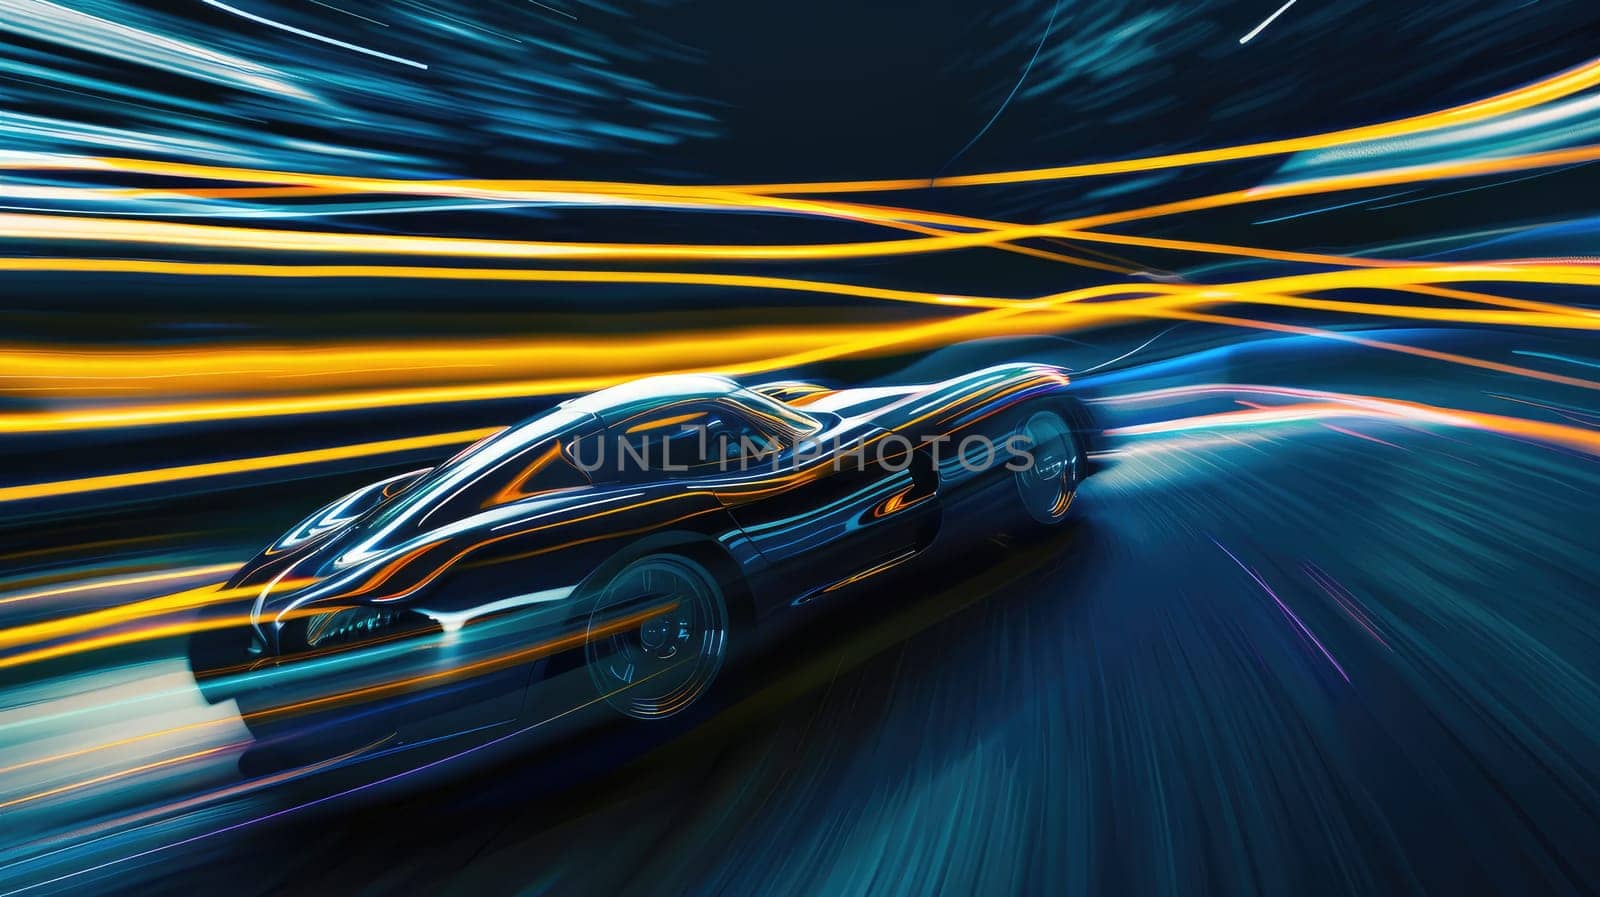 Dynamic camera toss shot of a modern sedan vehicle in motion.